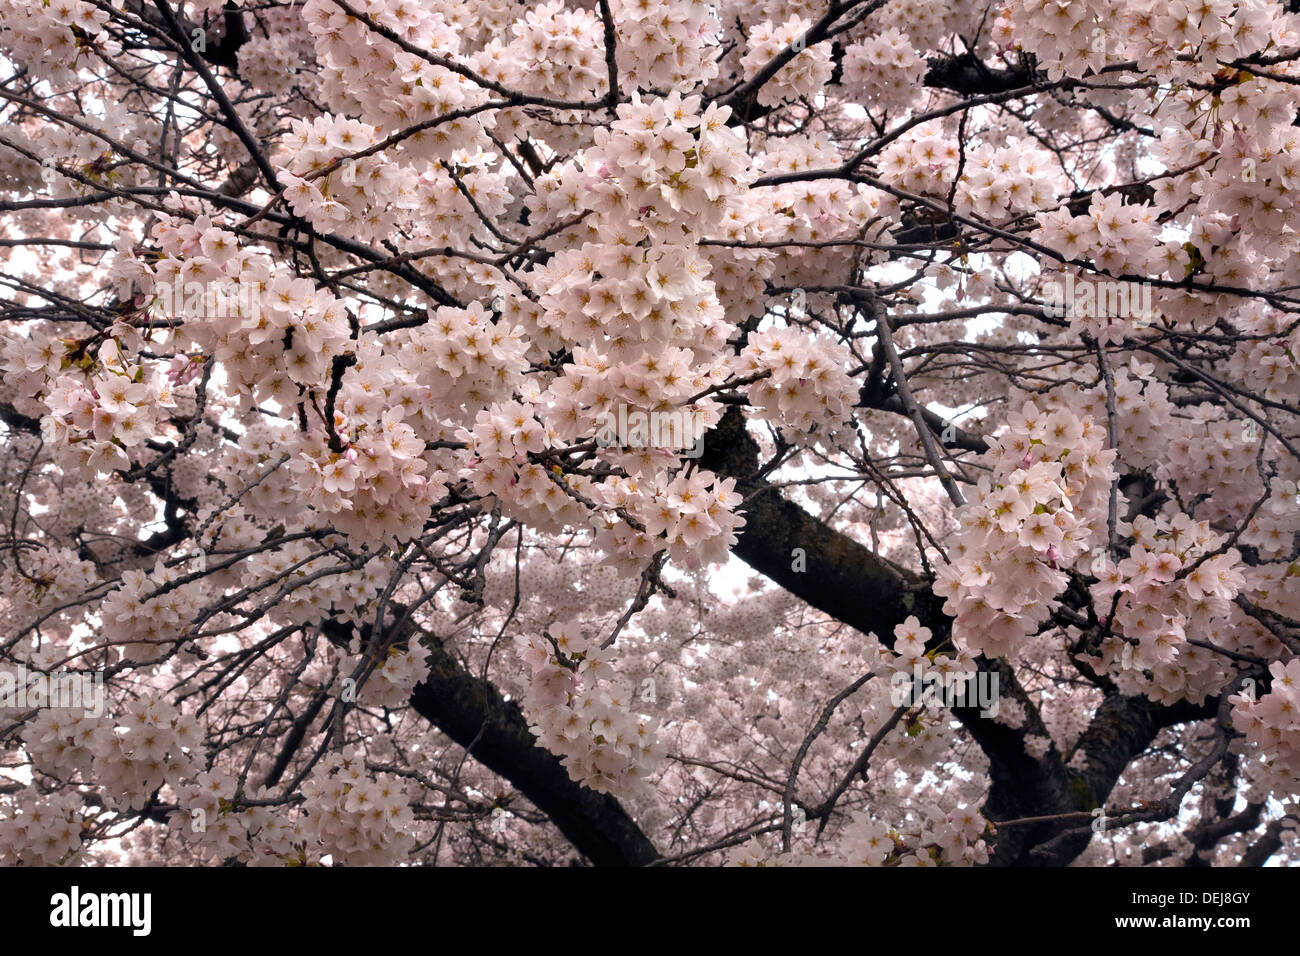 WASHINGTON - Kirschbäume blühen entlang der Quad an der University of Washington in Seattle. Stockfoto